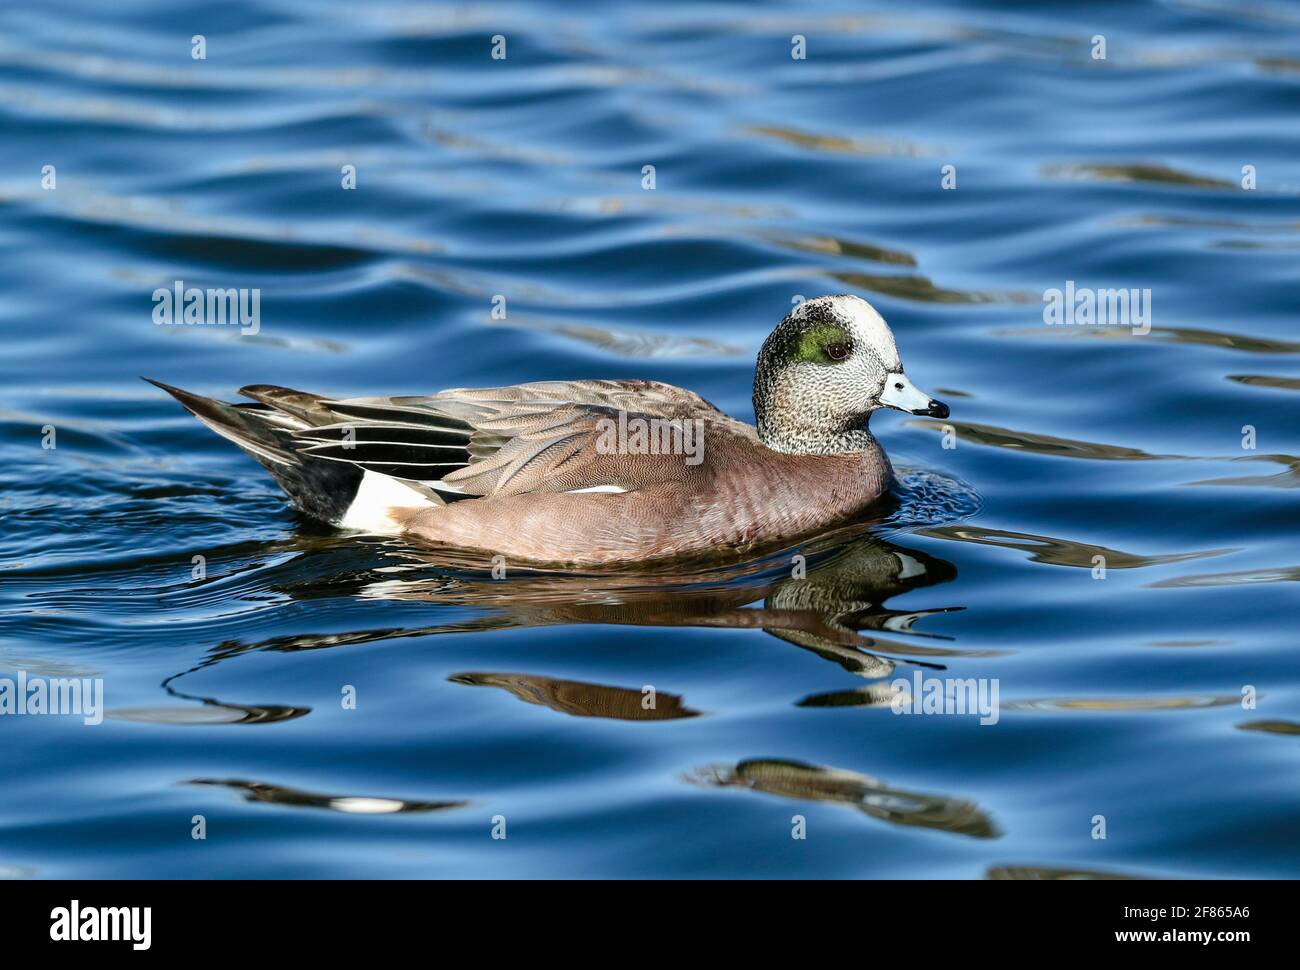 Primer plano de un pato americano Wigeon flotando en un bonito lago azul con olas ondulantes. Foto de stock